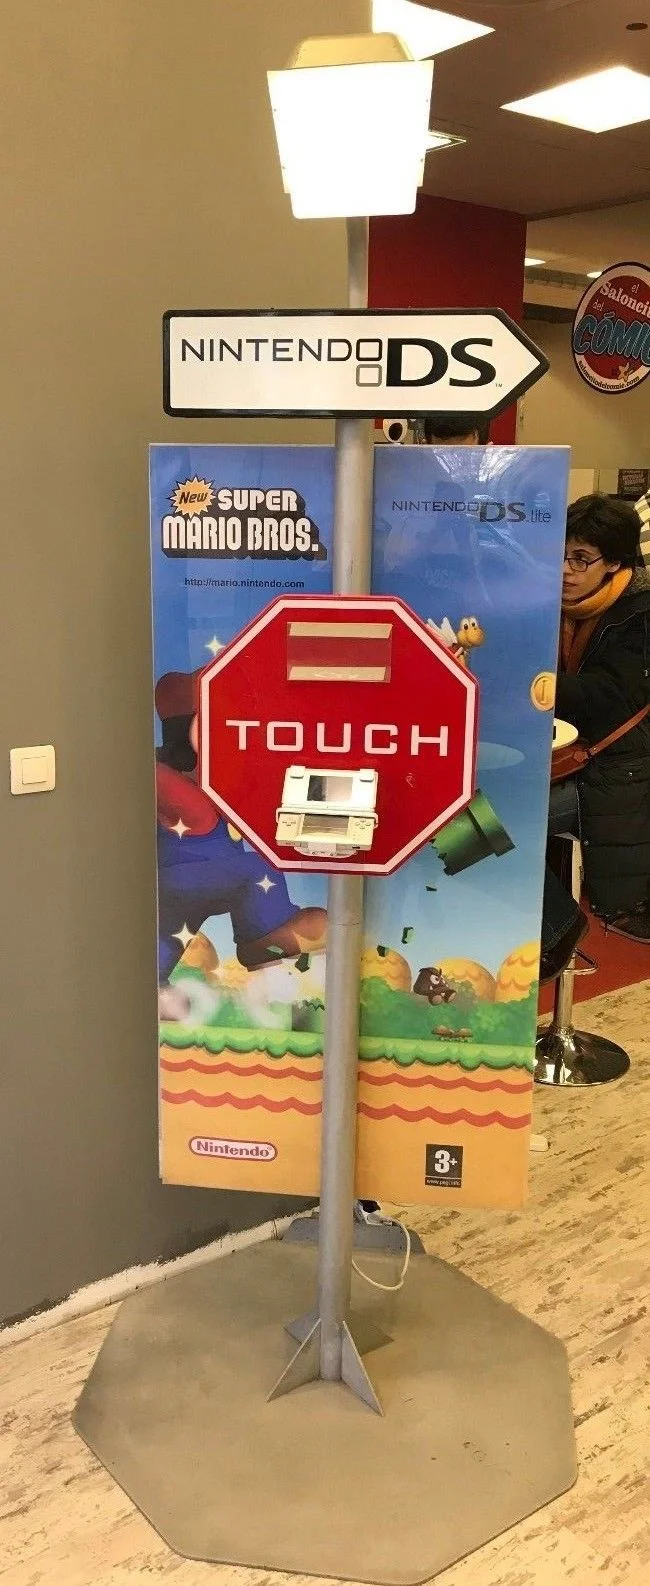  Nintendo DS New Super Mario Bros Kiosk